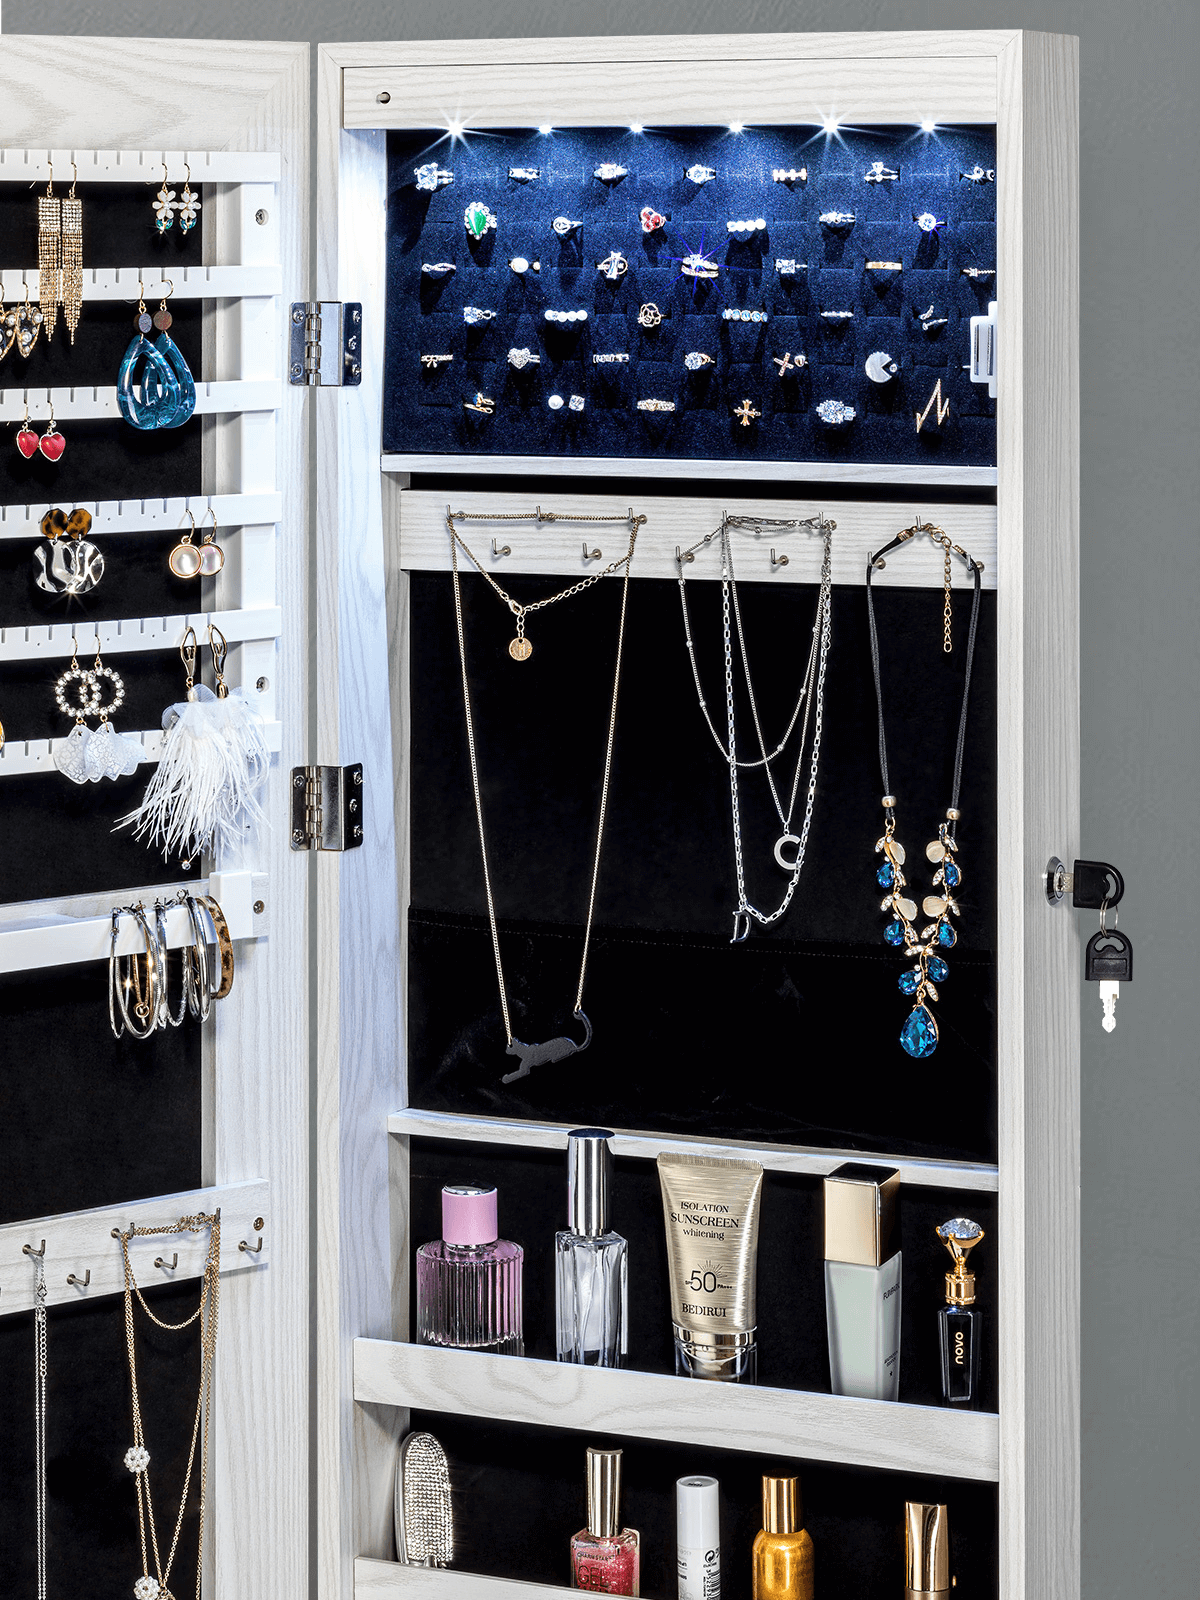 Nina LED Wall Mounted Jewelry Cabinet Classic Design